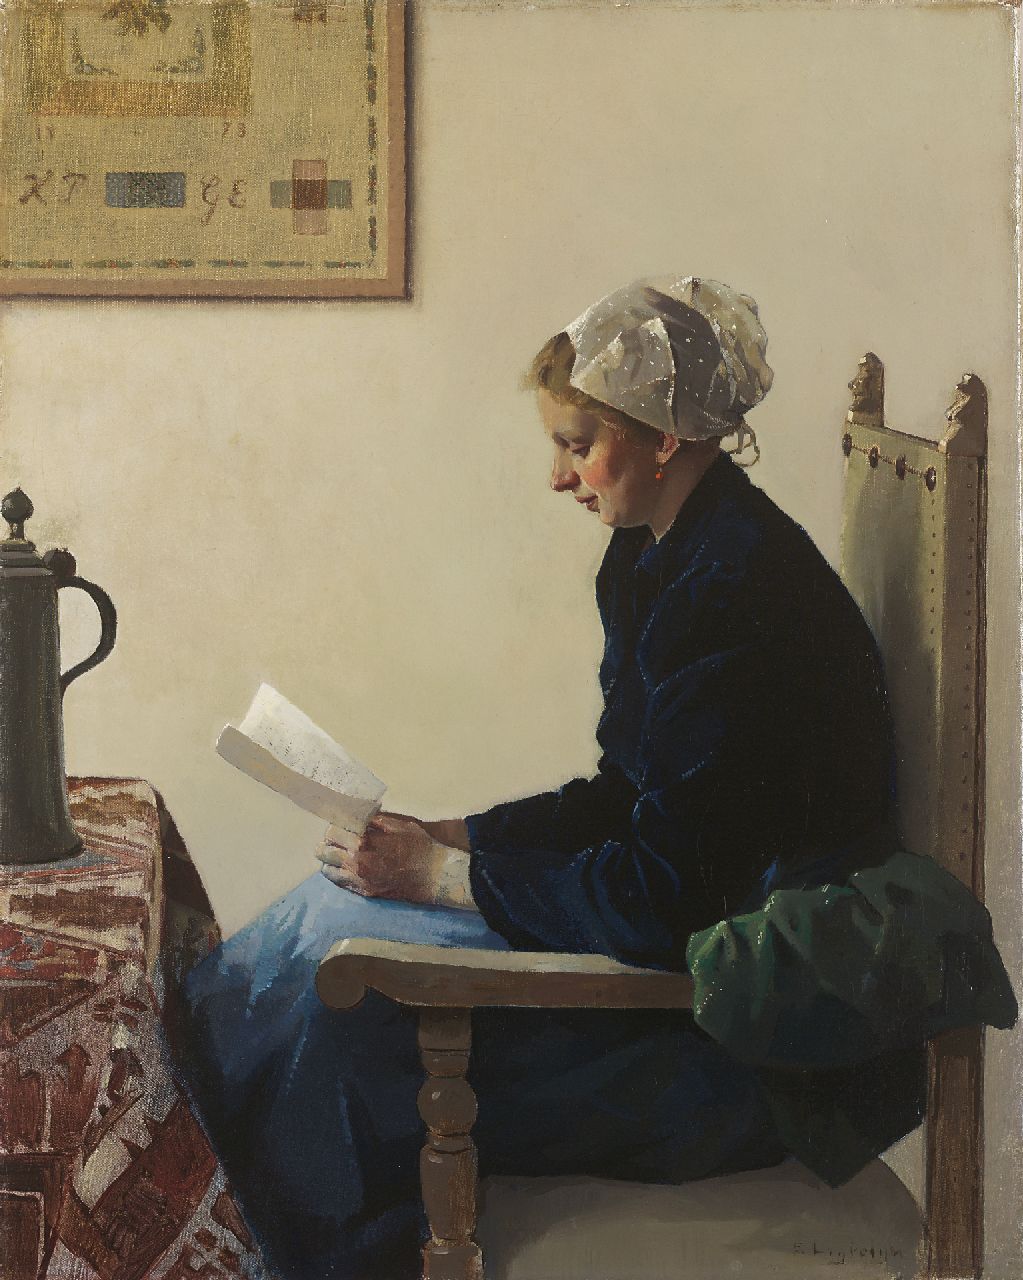 Ligtelijn E.J.  | Evert Jan Ligtelijn, Reading a letter, oil on canvas 50.4 x 40.3 cm, signed l.r.